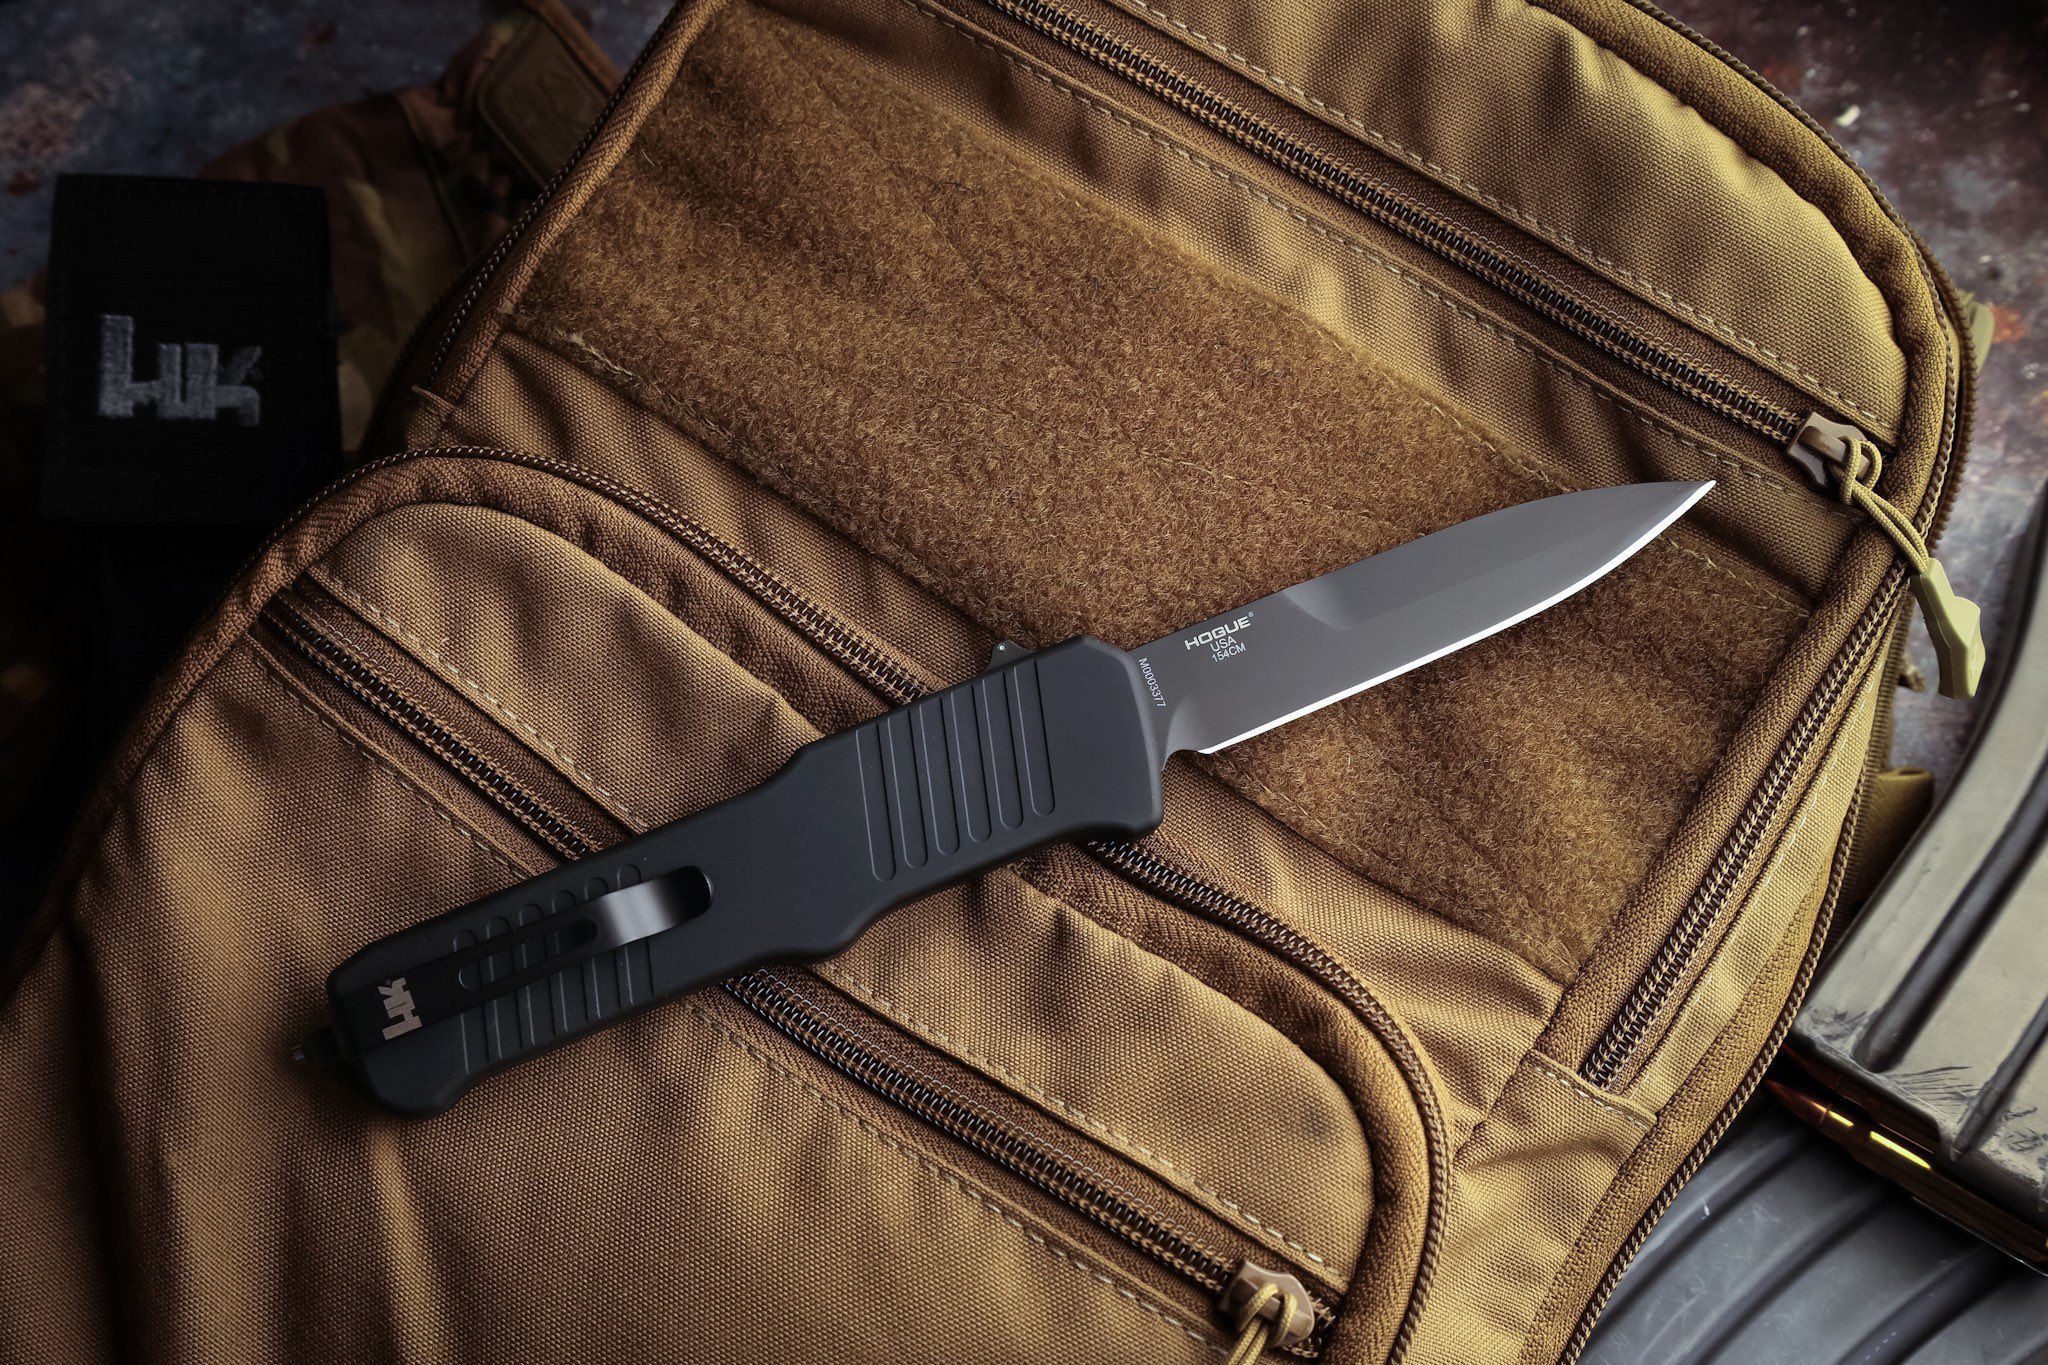 Heckler & Koch Knives - Knives - Hogue Products